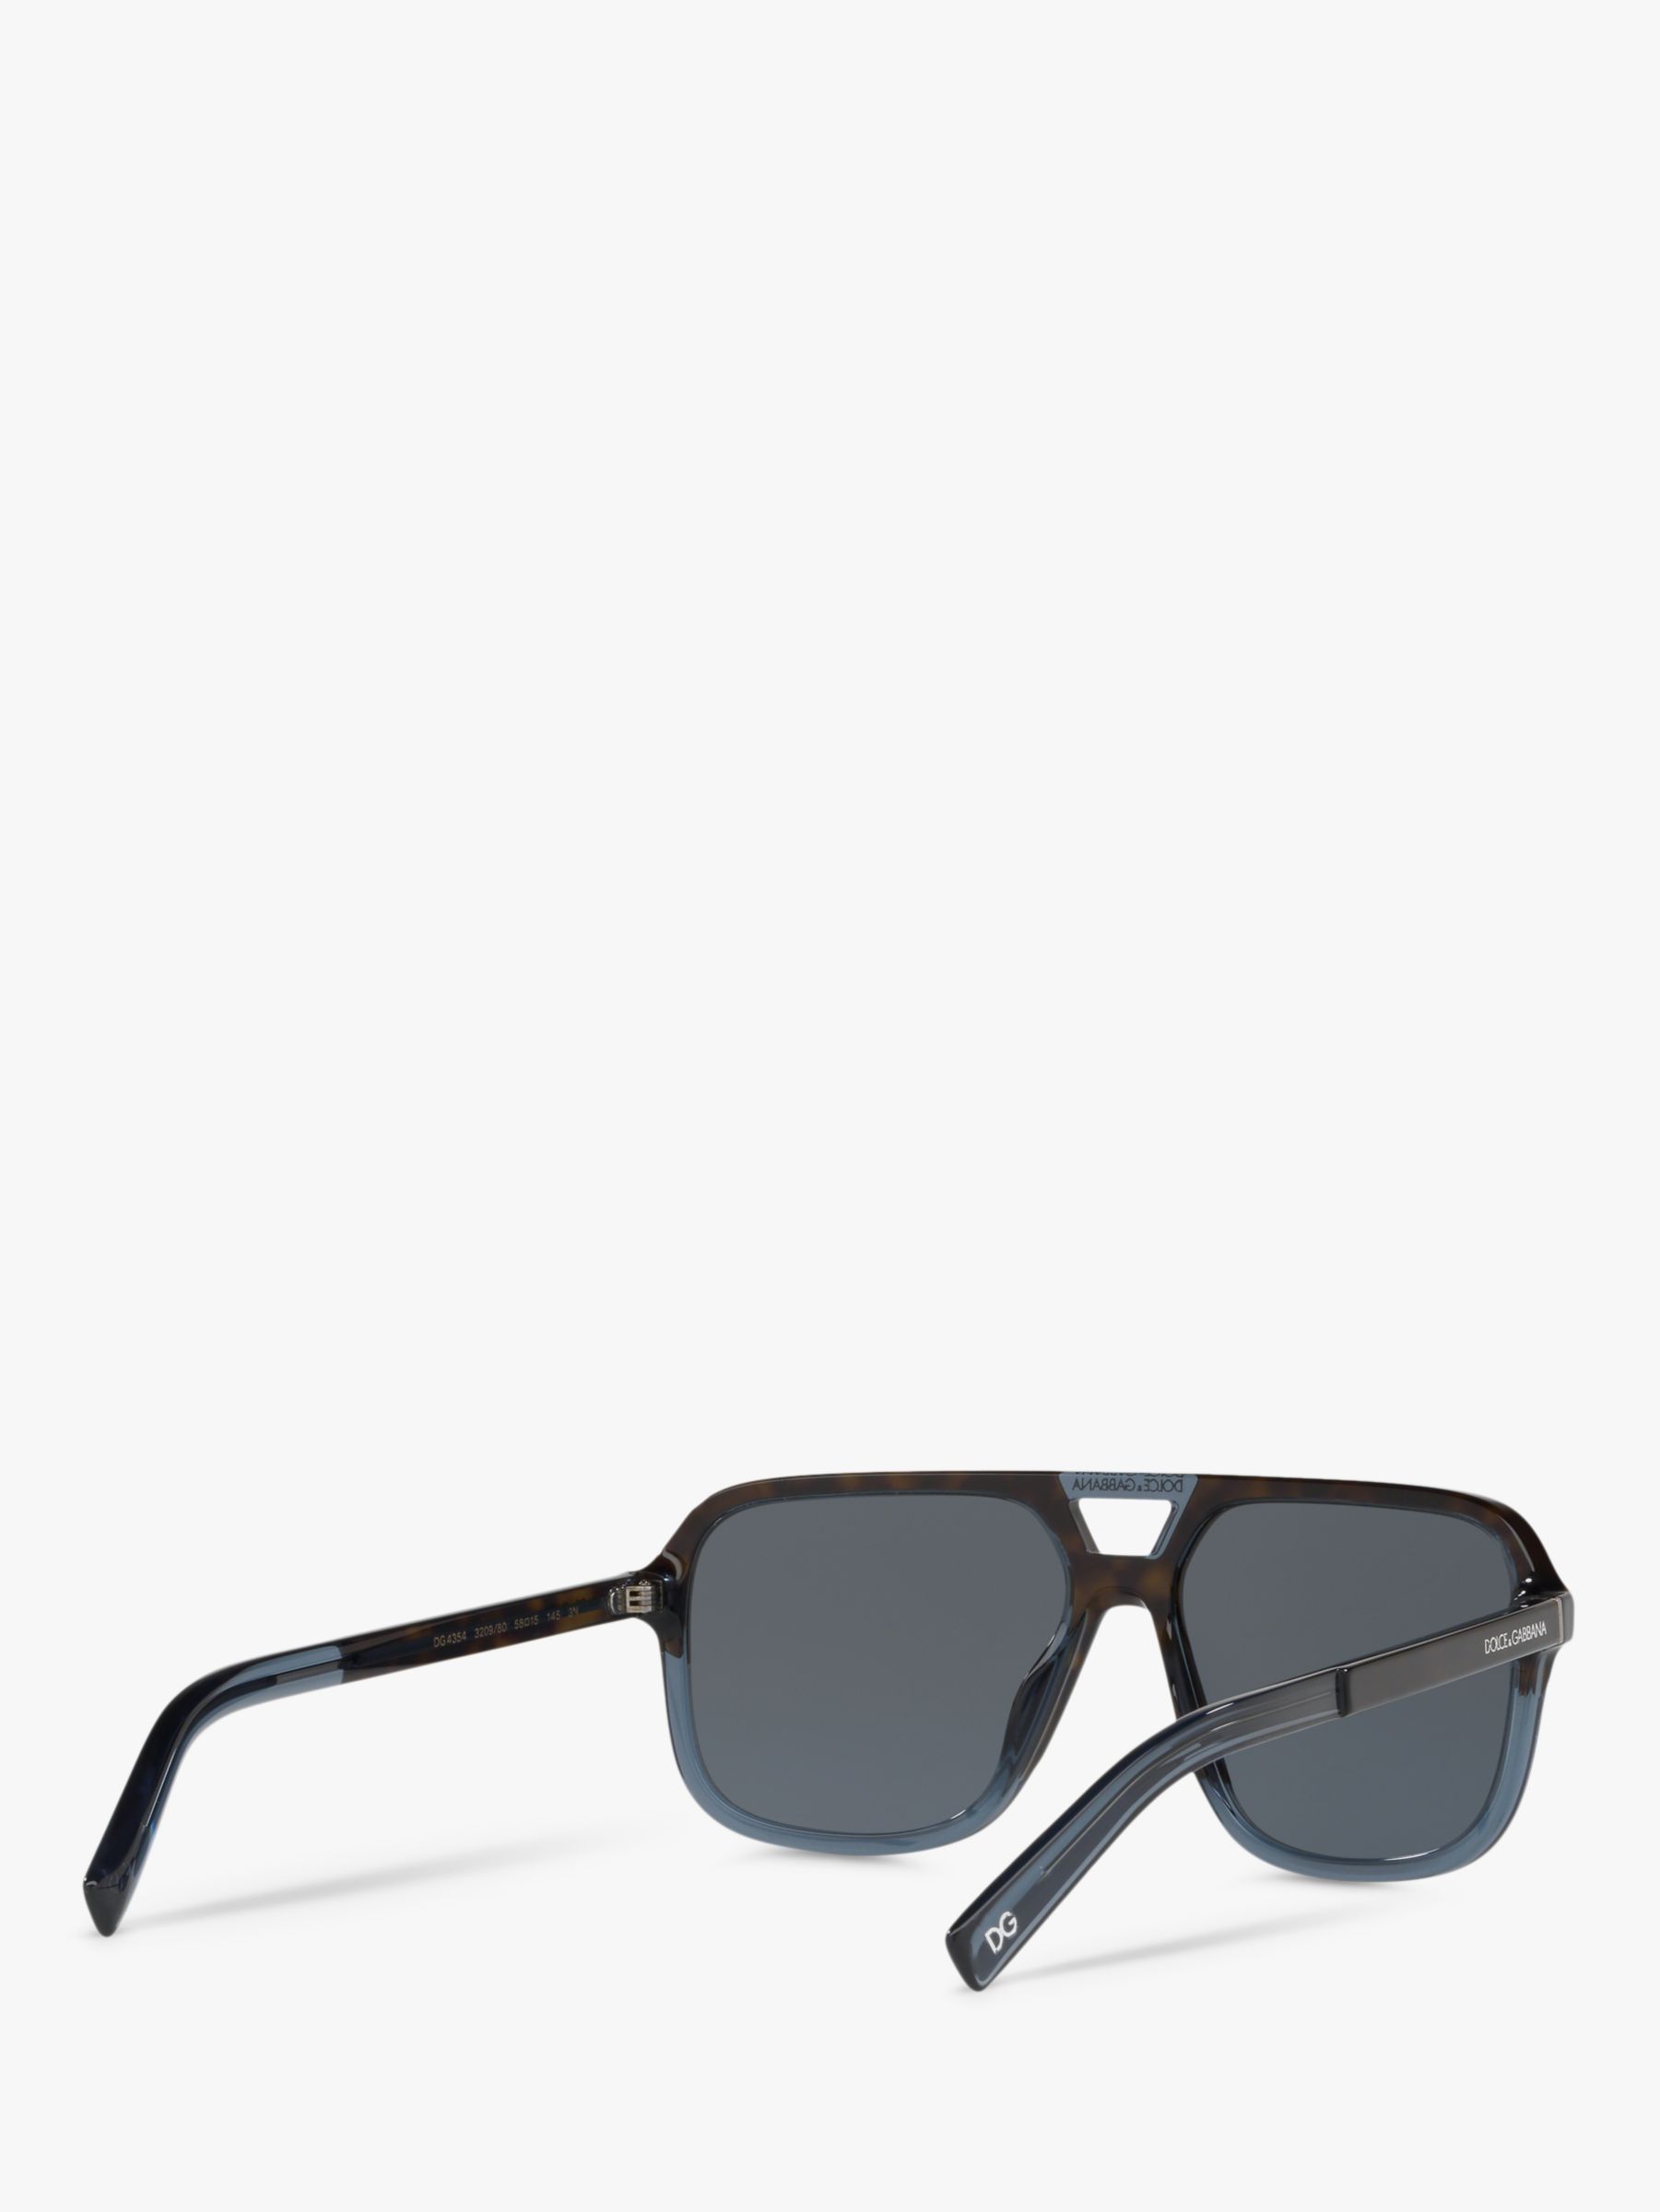 Dolce & Gabbana DG4354 Men's Square Sunglasses, Brown/Blue at John ...